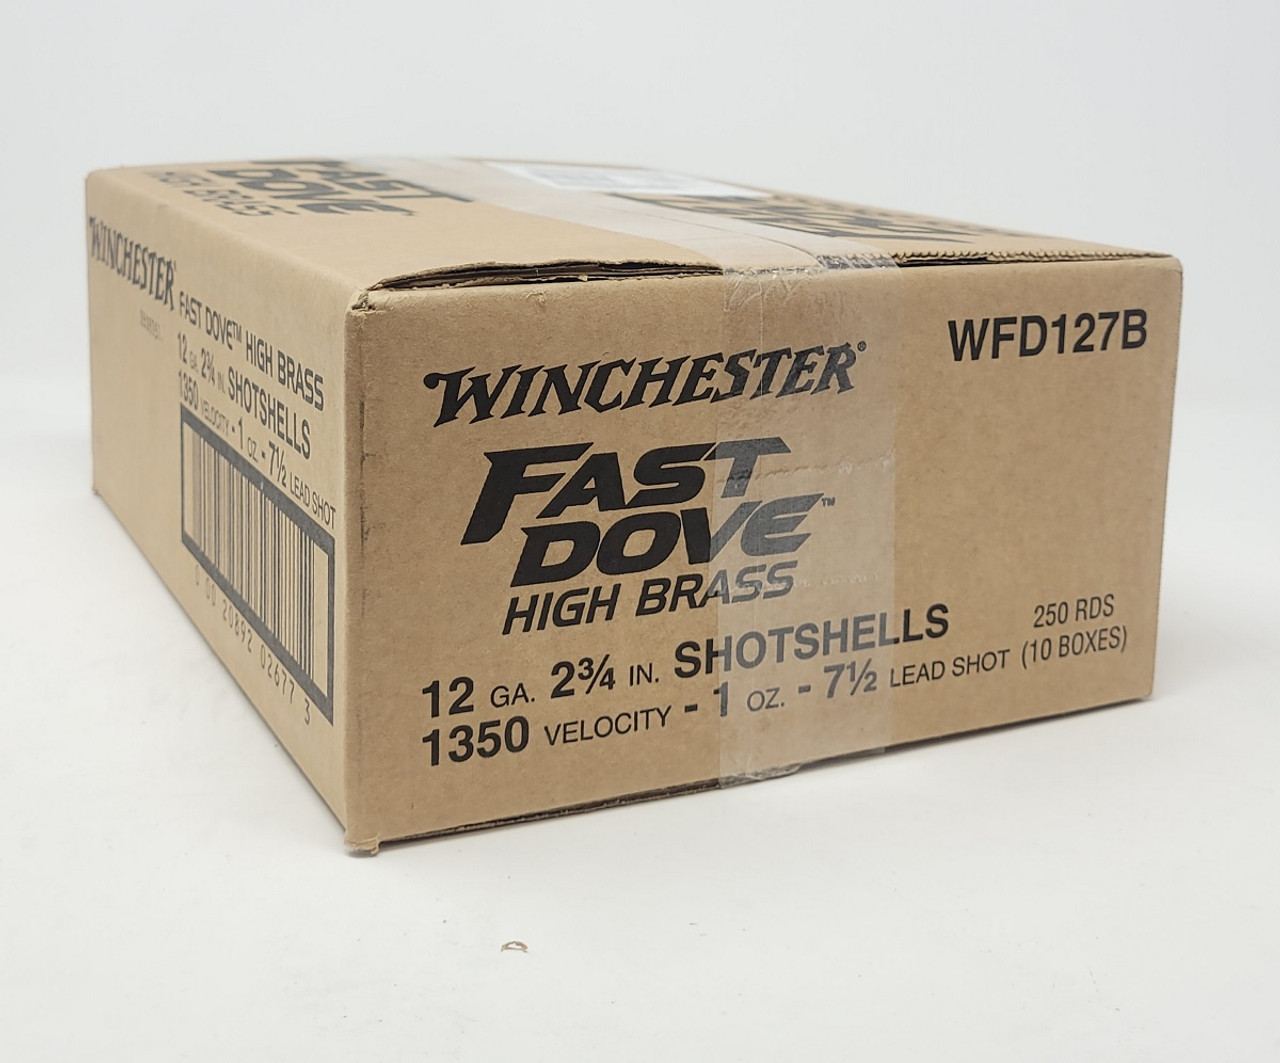 Winchester Fast Dove High Brass 12 Ga 2 3/4 1 Oz Case 250 Rd